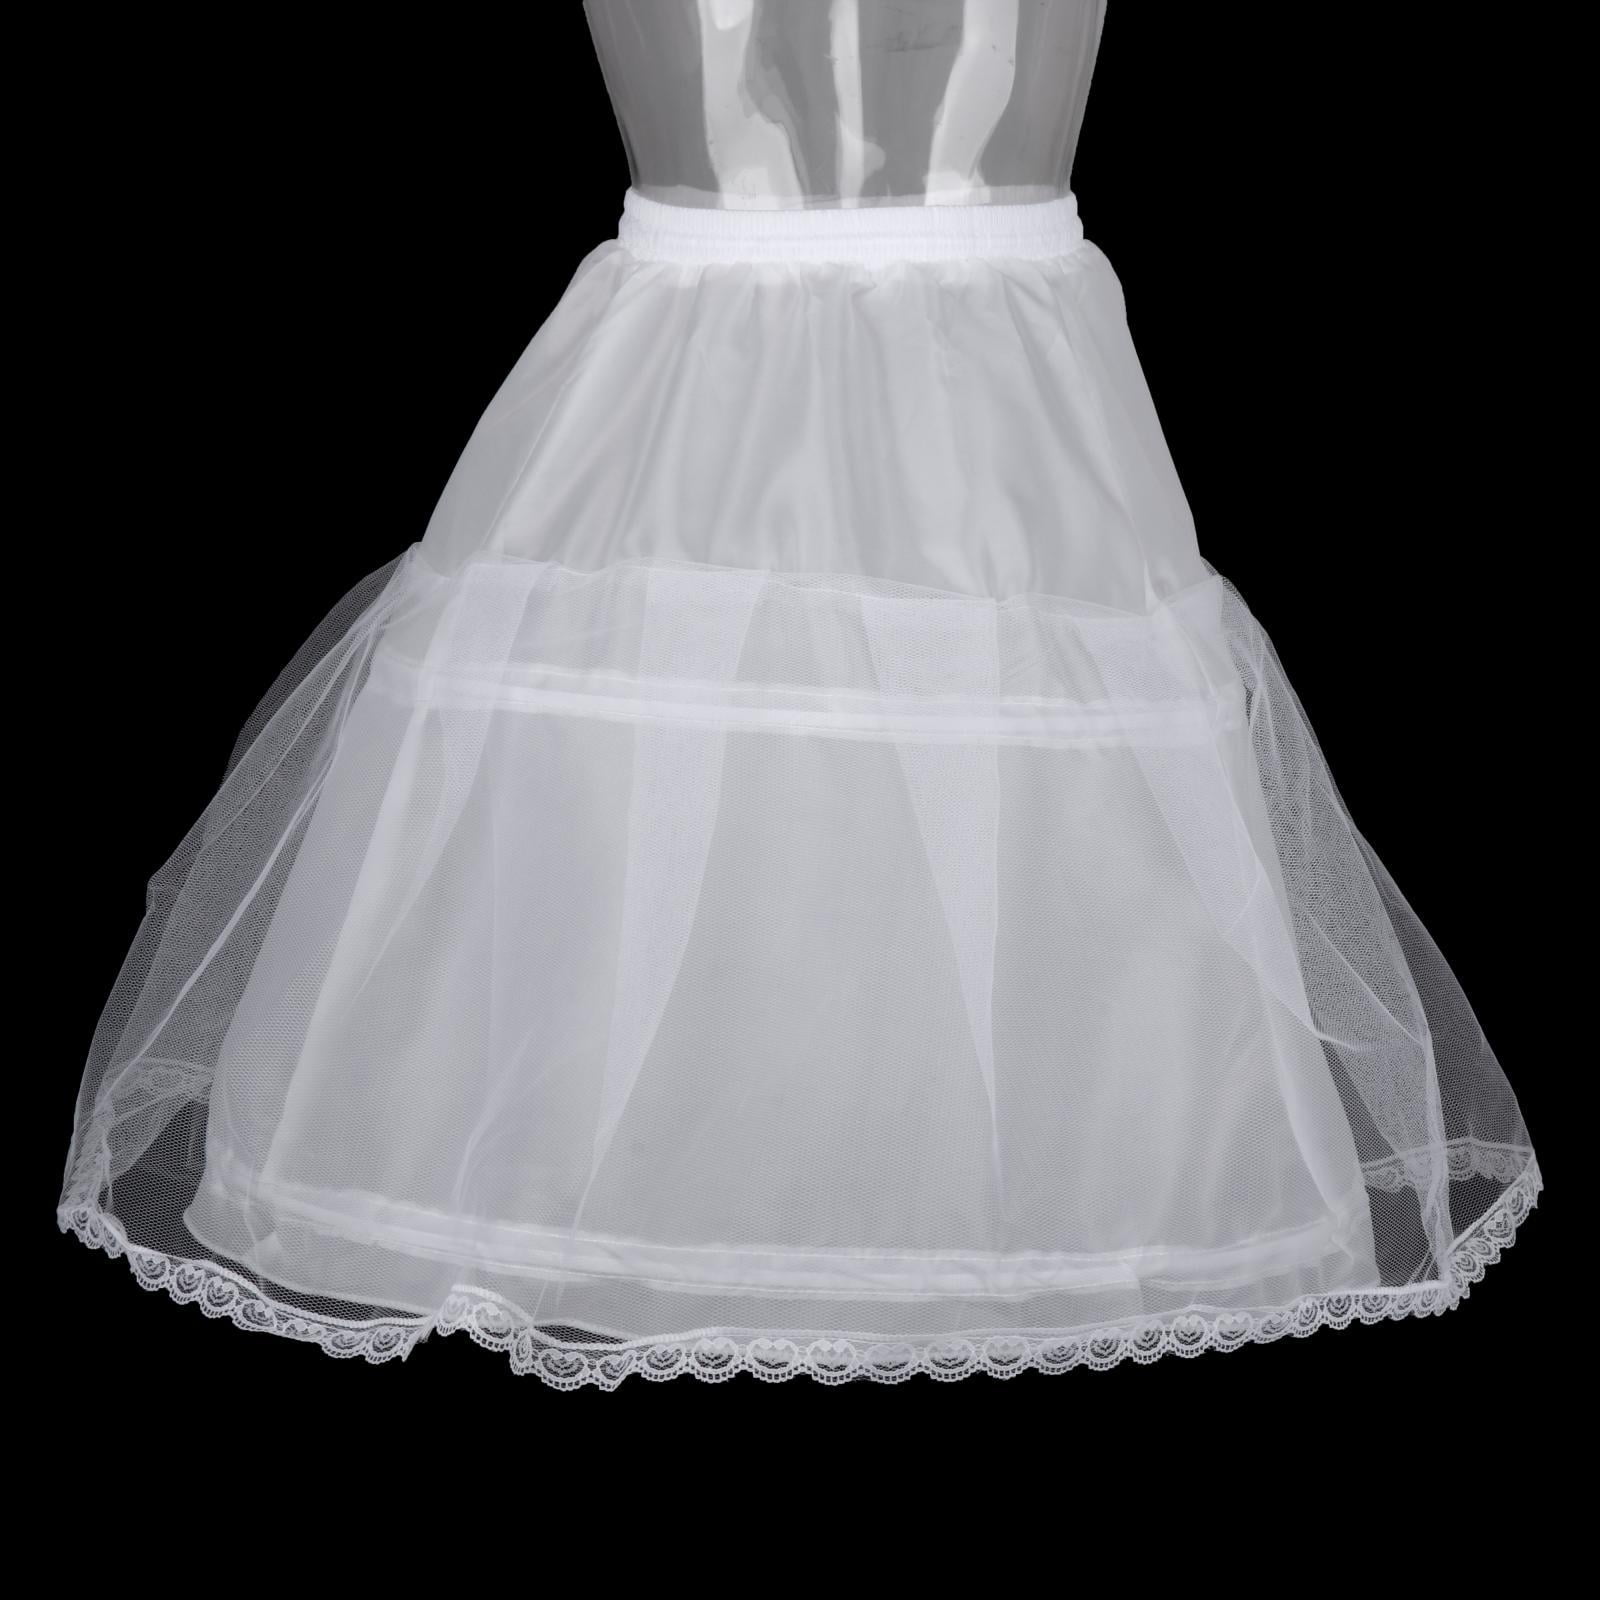 mqatz fashion crinoline petticoat skirt for| Alibaba.com